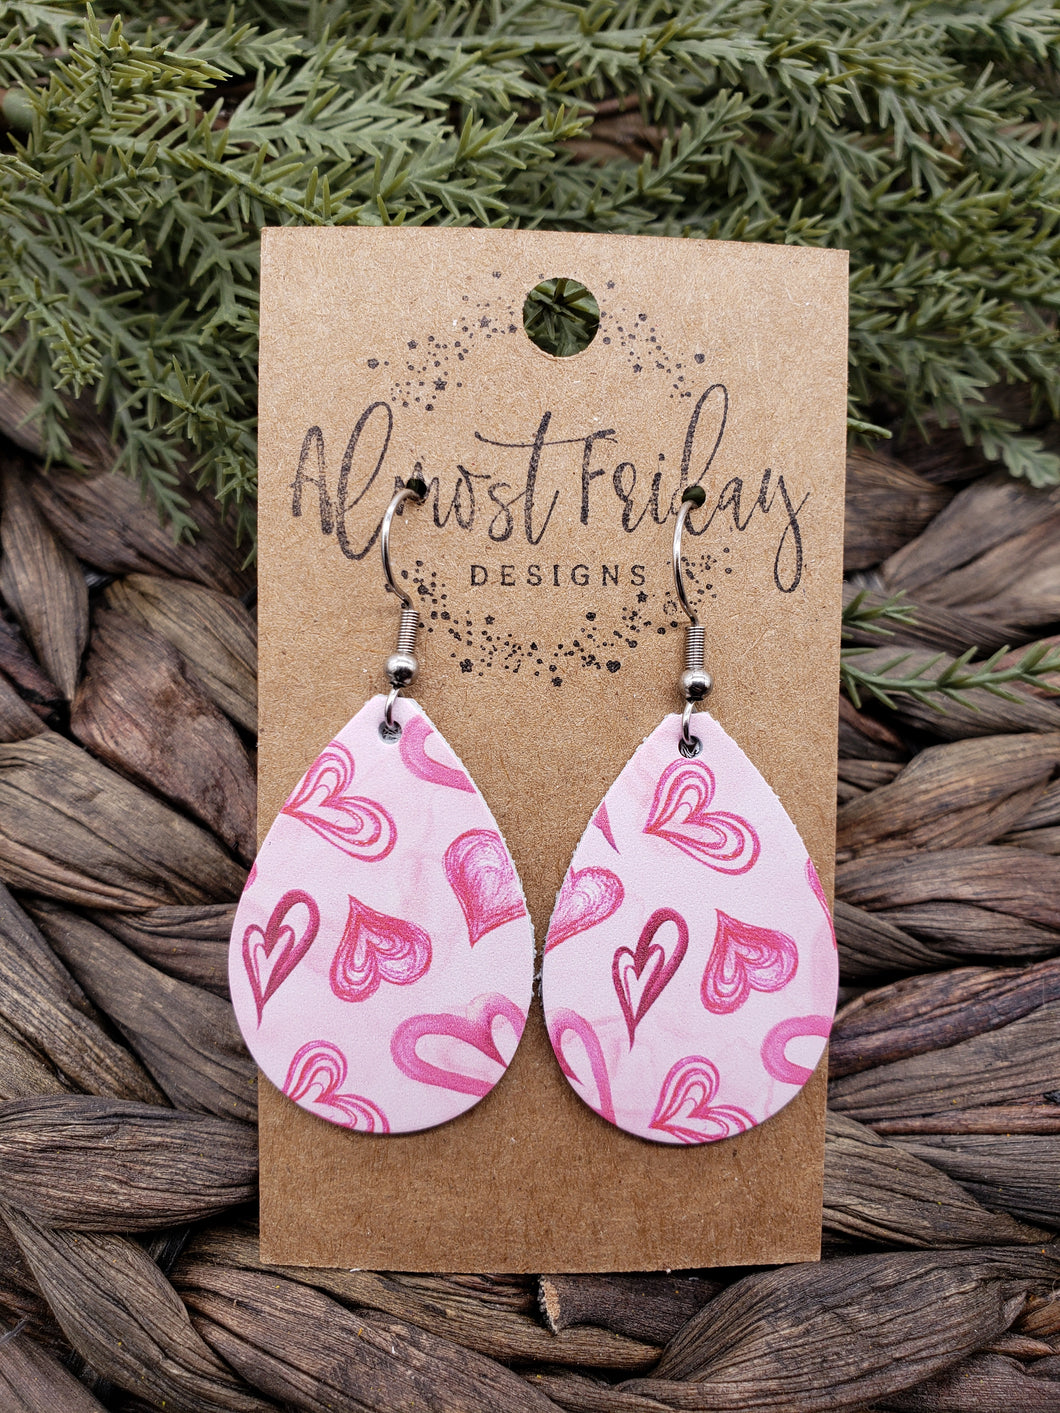 Genuine Leather Earrings - Valentine's Day - Teardrop Earrings - Heart - Pink and Red Hearts - Statement Earrings